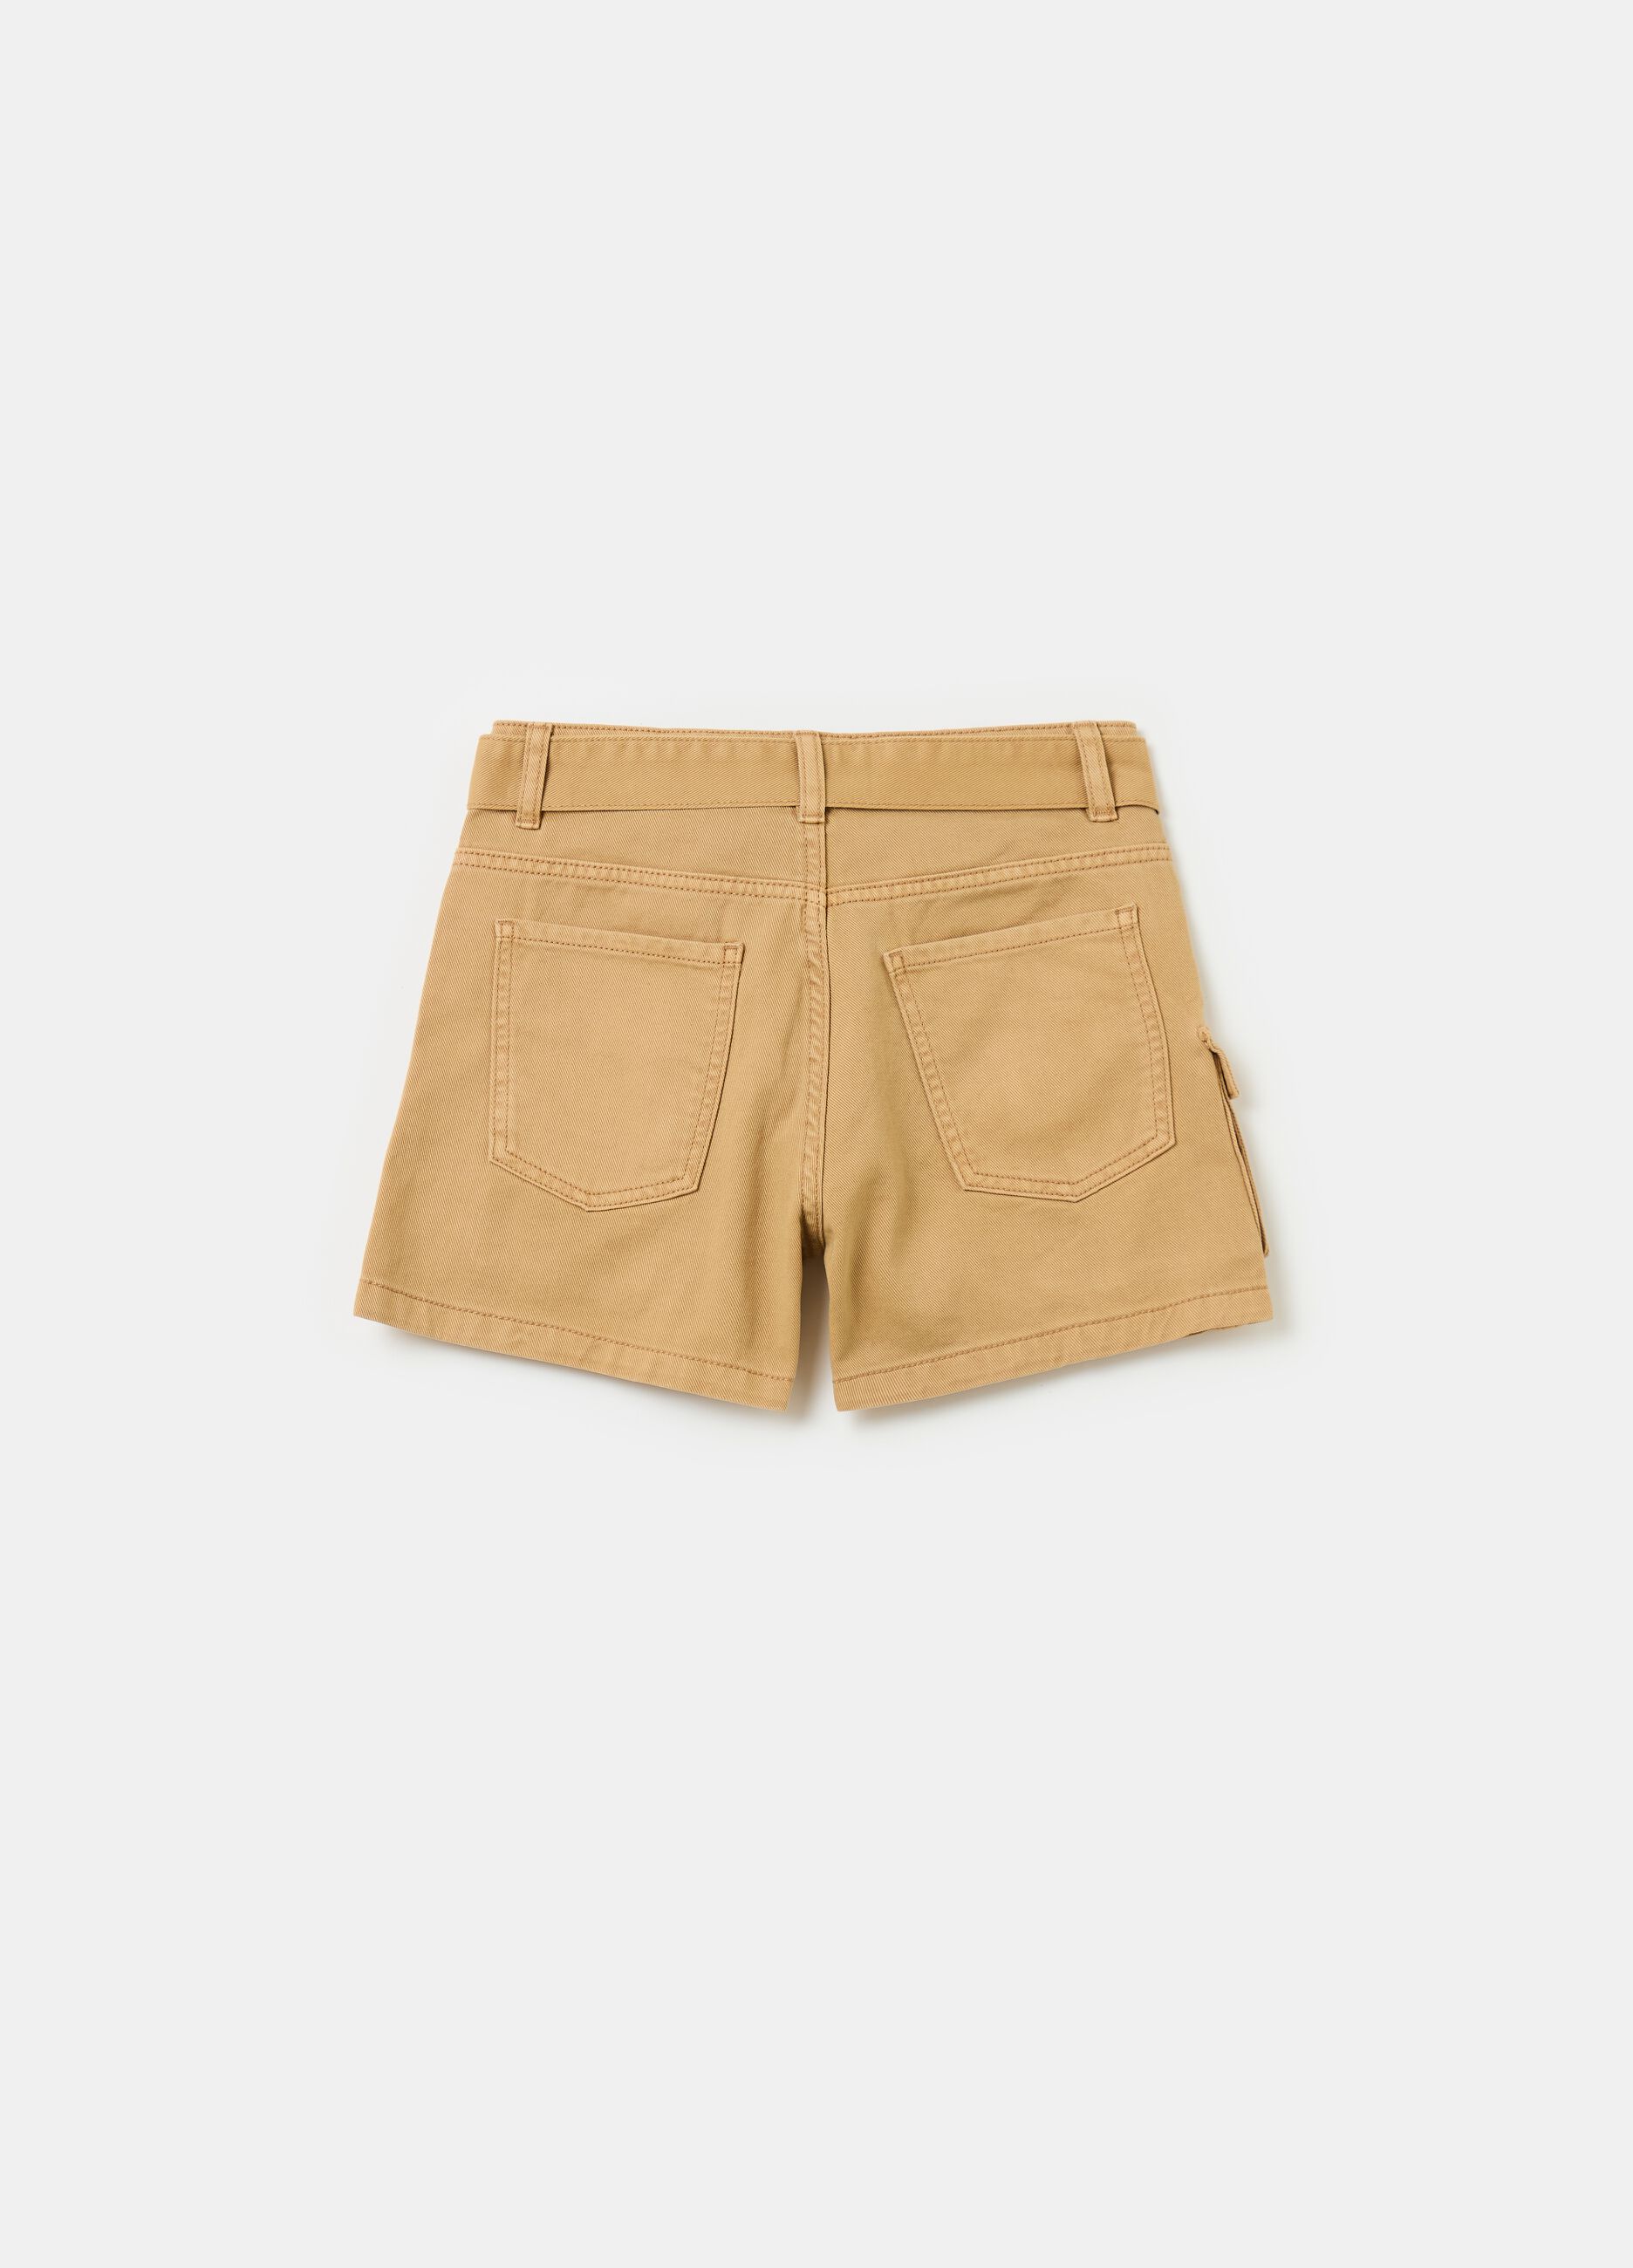 Cotton cargo shorts with belt